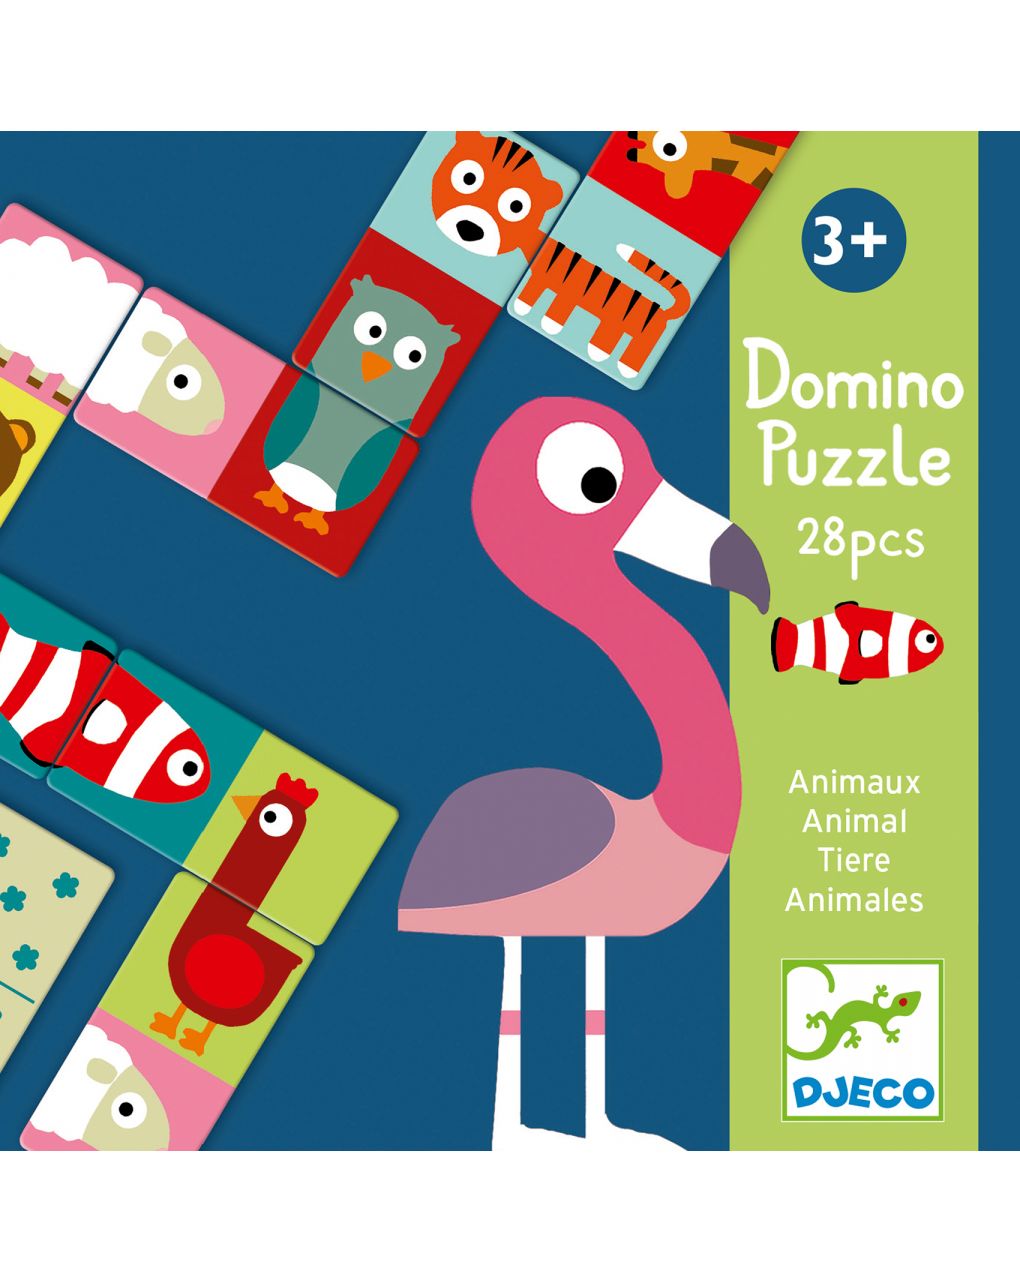 Domino animo-puzzle 28 carte - djeco - Djeco